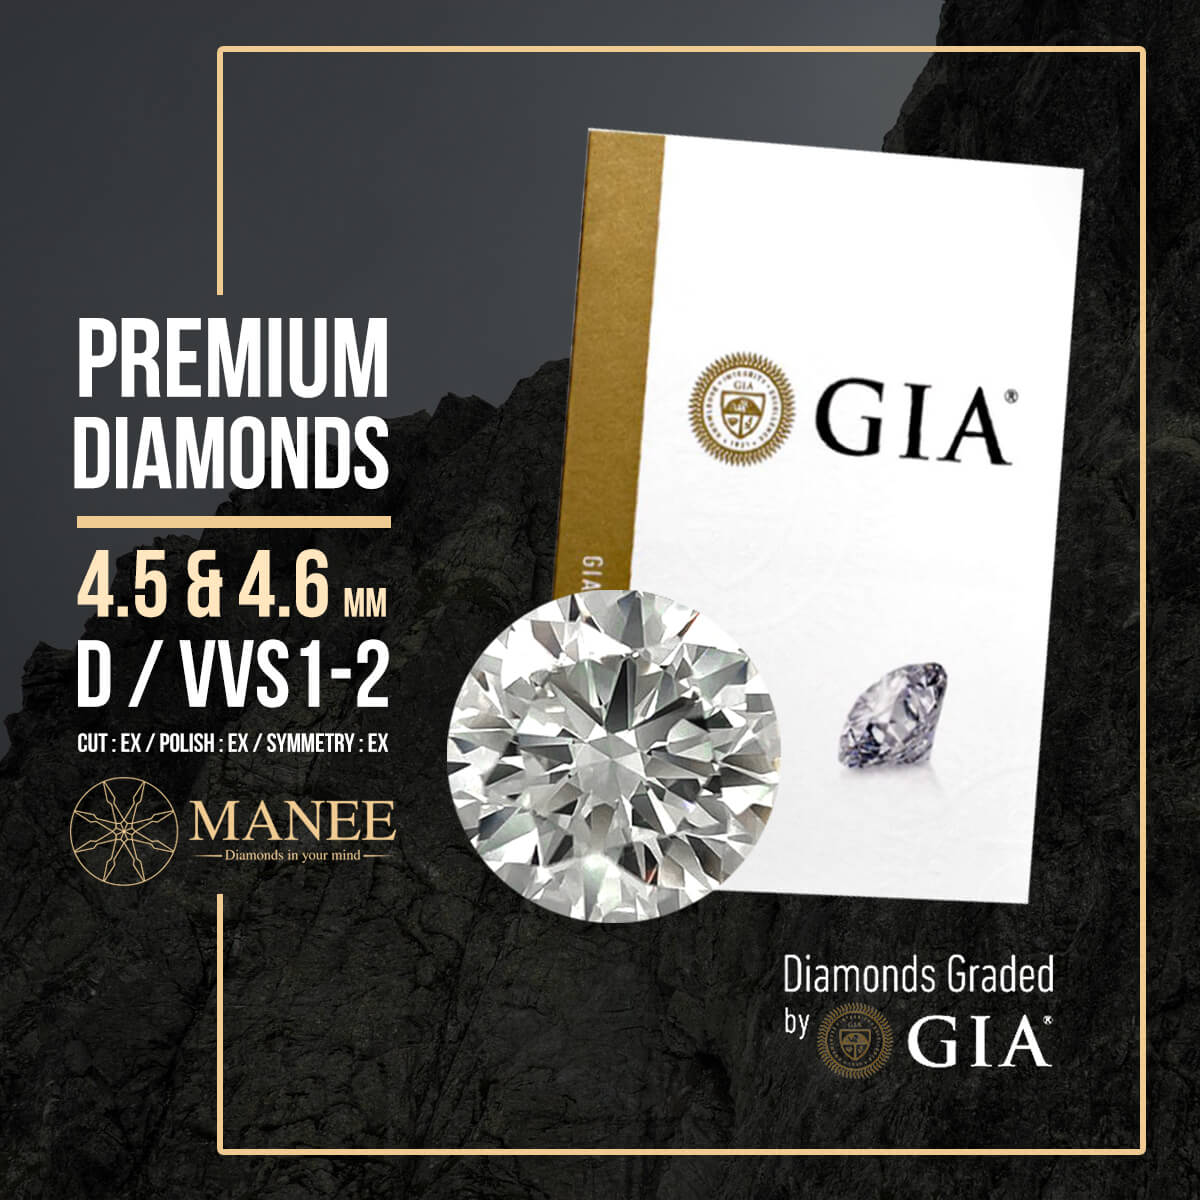 4.5 & 4.6 mm Premium GIA Diamonds